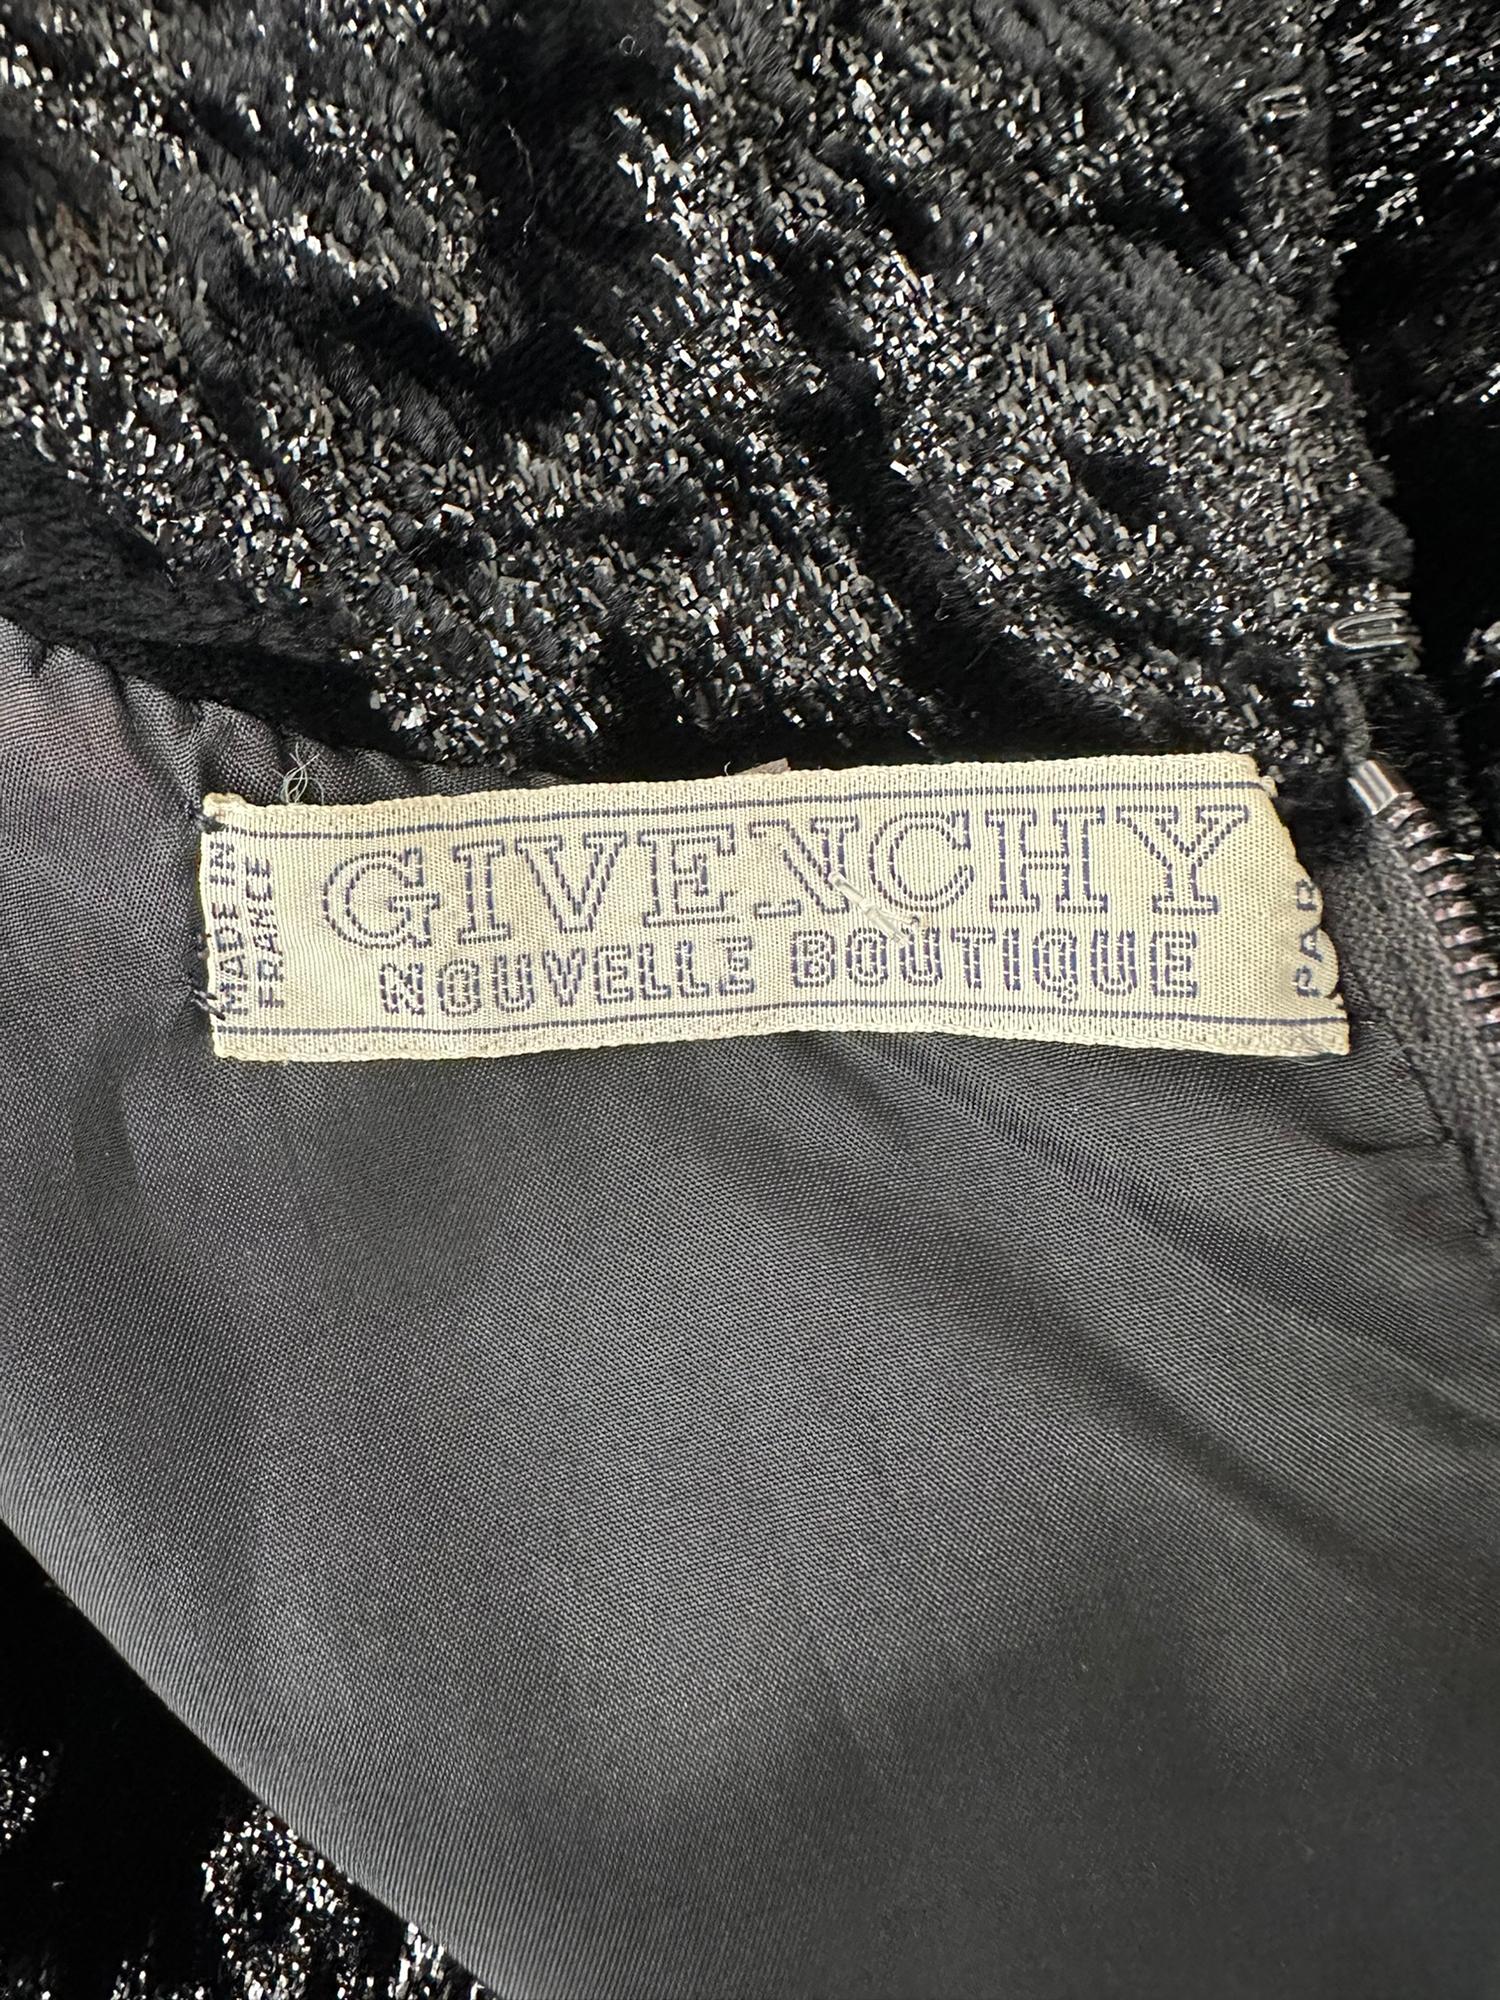 Givenchy Black Princess Seam Glittery Paisley Cut Velvet Tunic & Pant Set 1970s For Sale 9